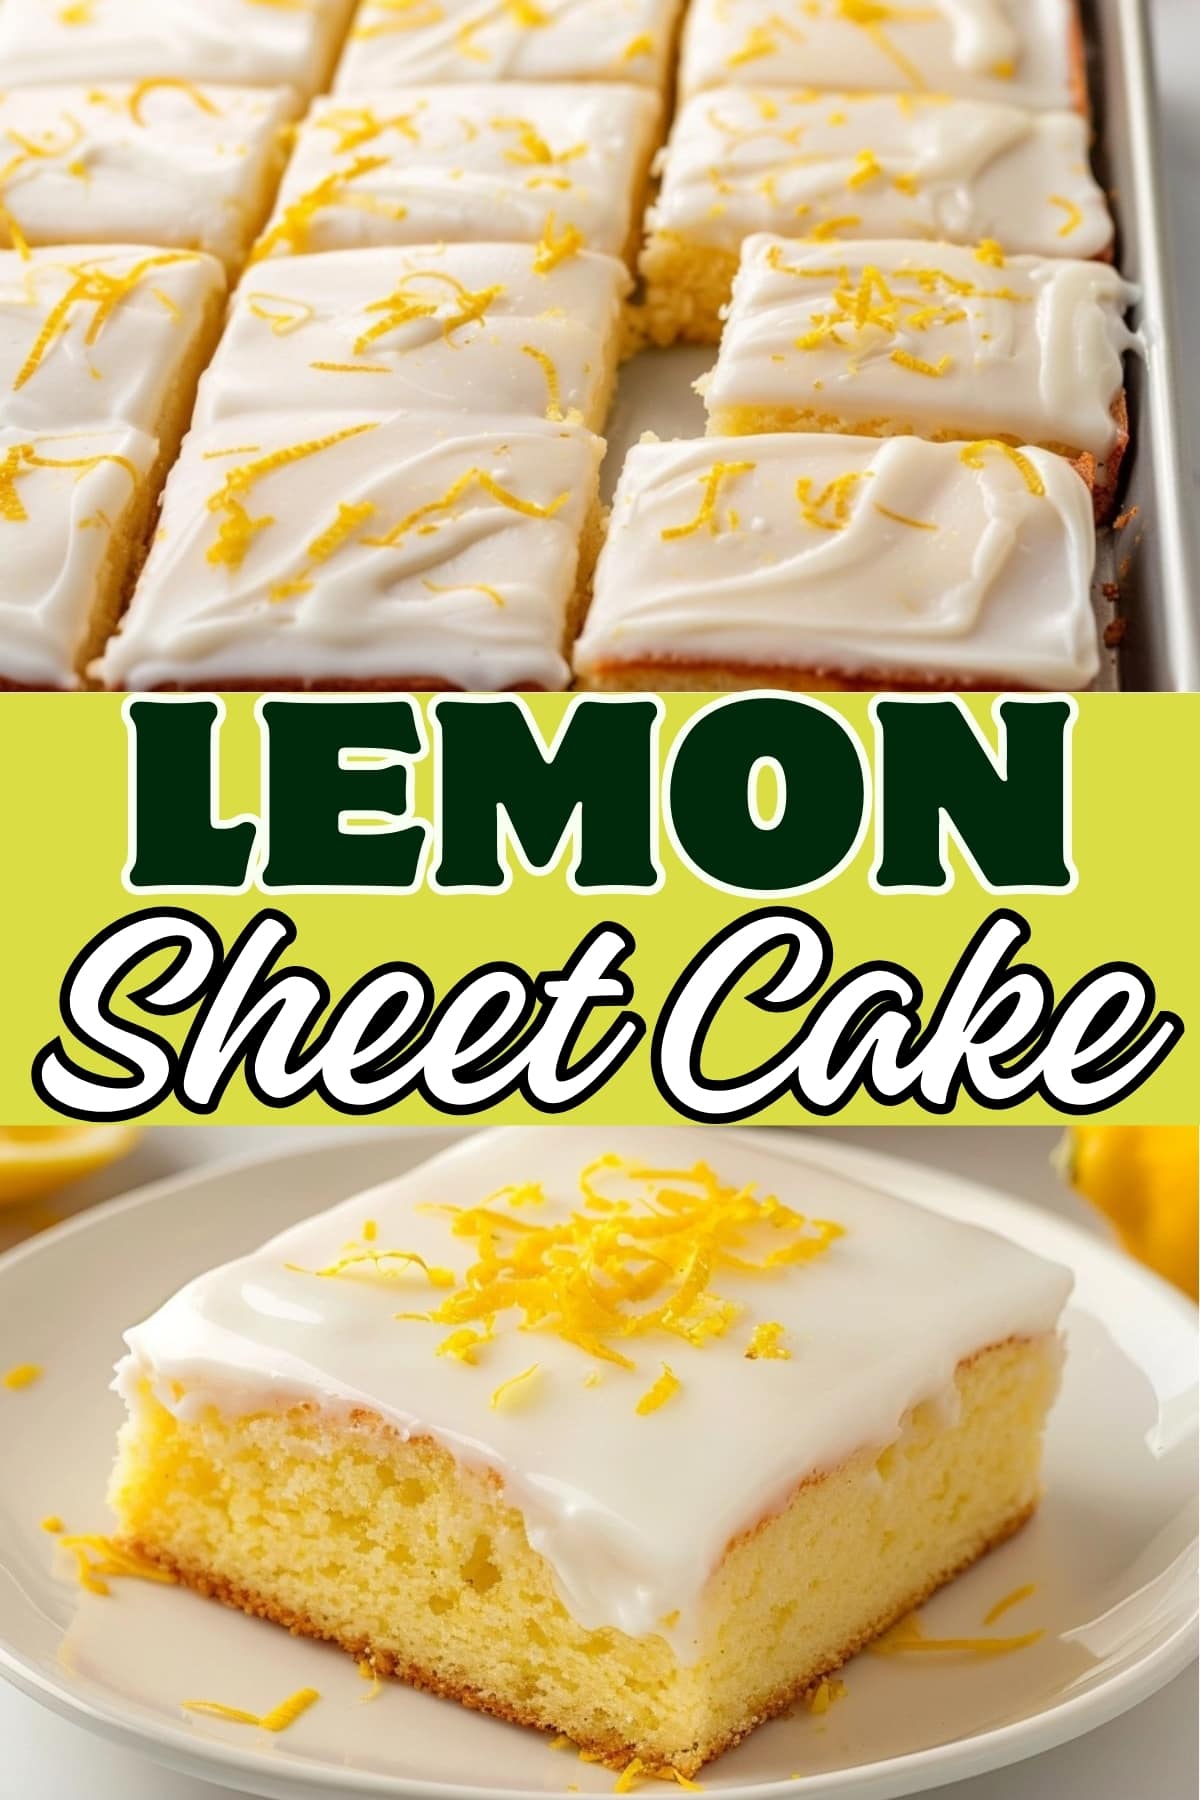 Lemon Sheet Cake with Lemon Glaze